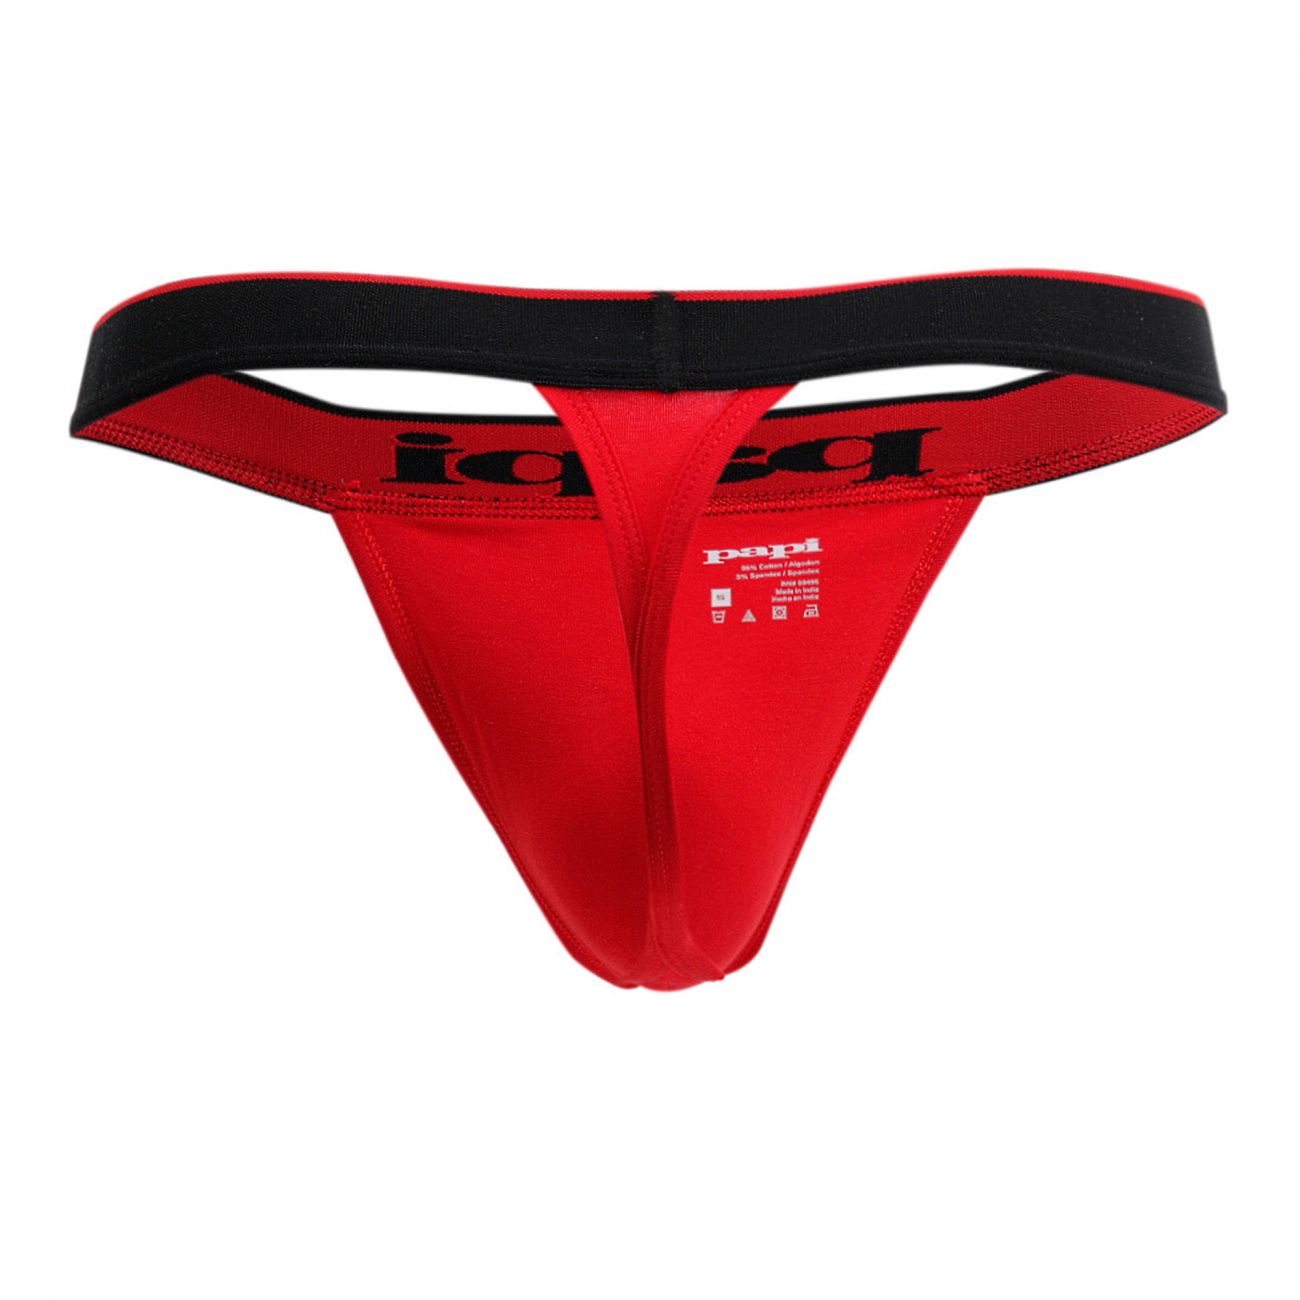 Mens Underwear: Papi 980902-950 3PK Cotton Stretch Thong | eBay